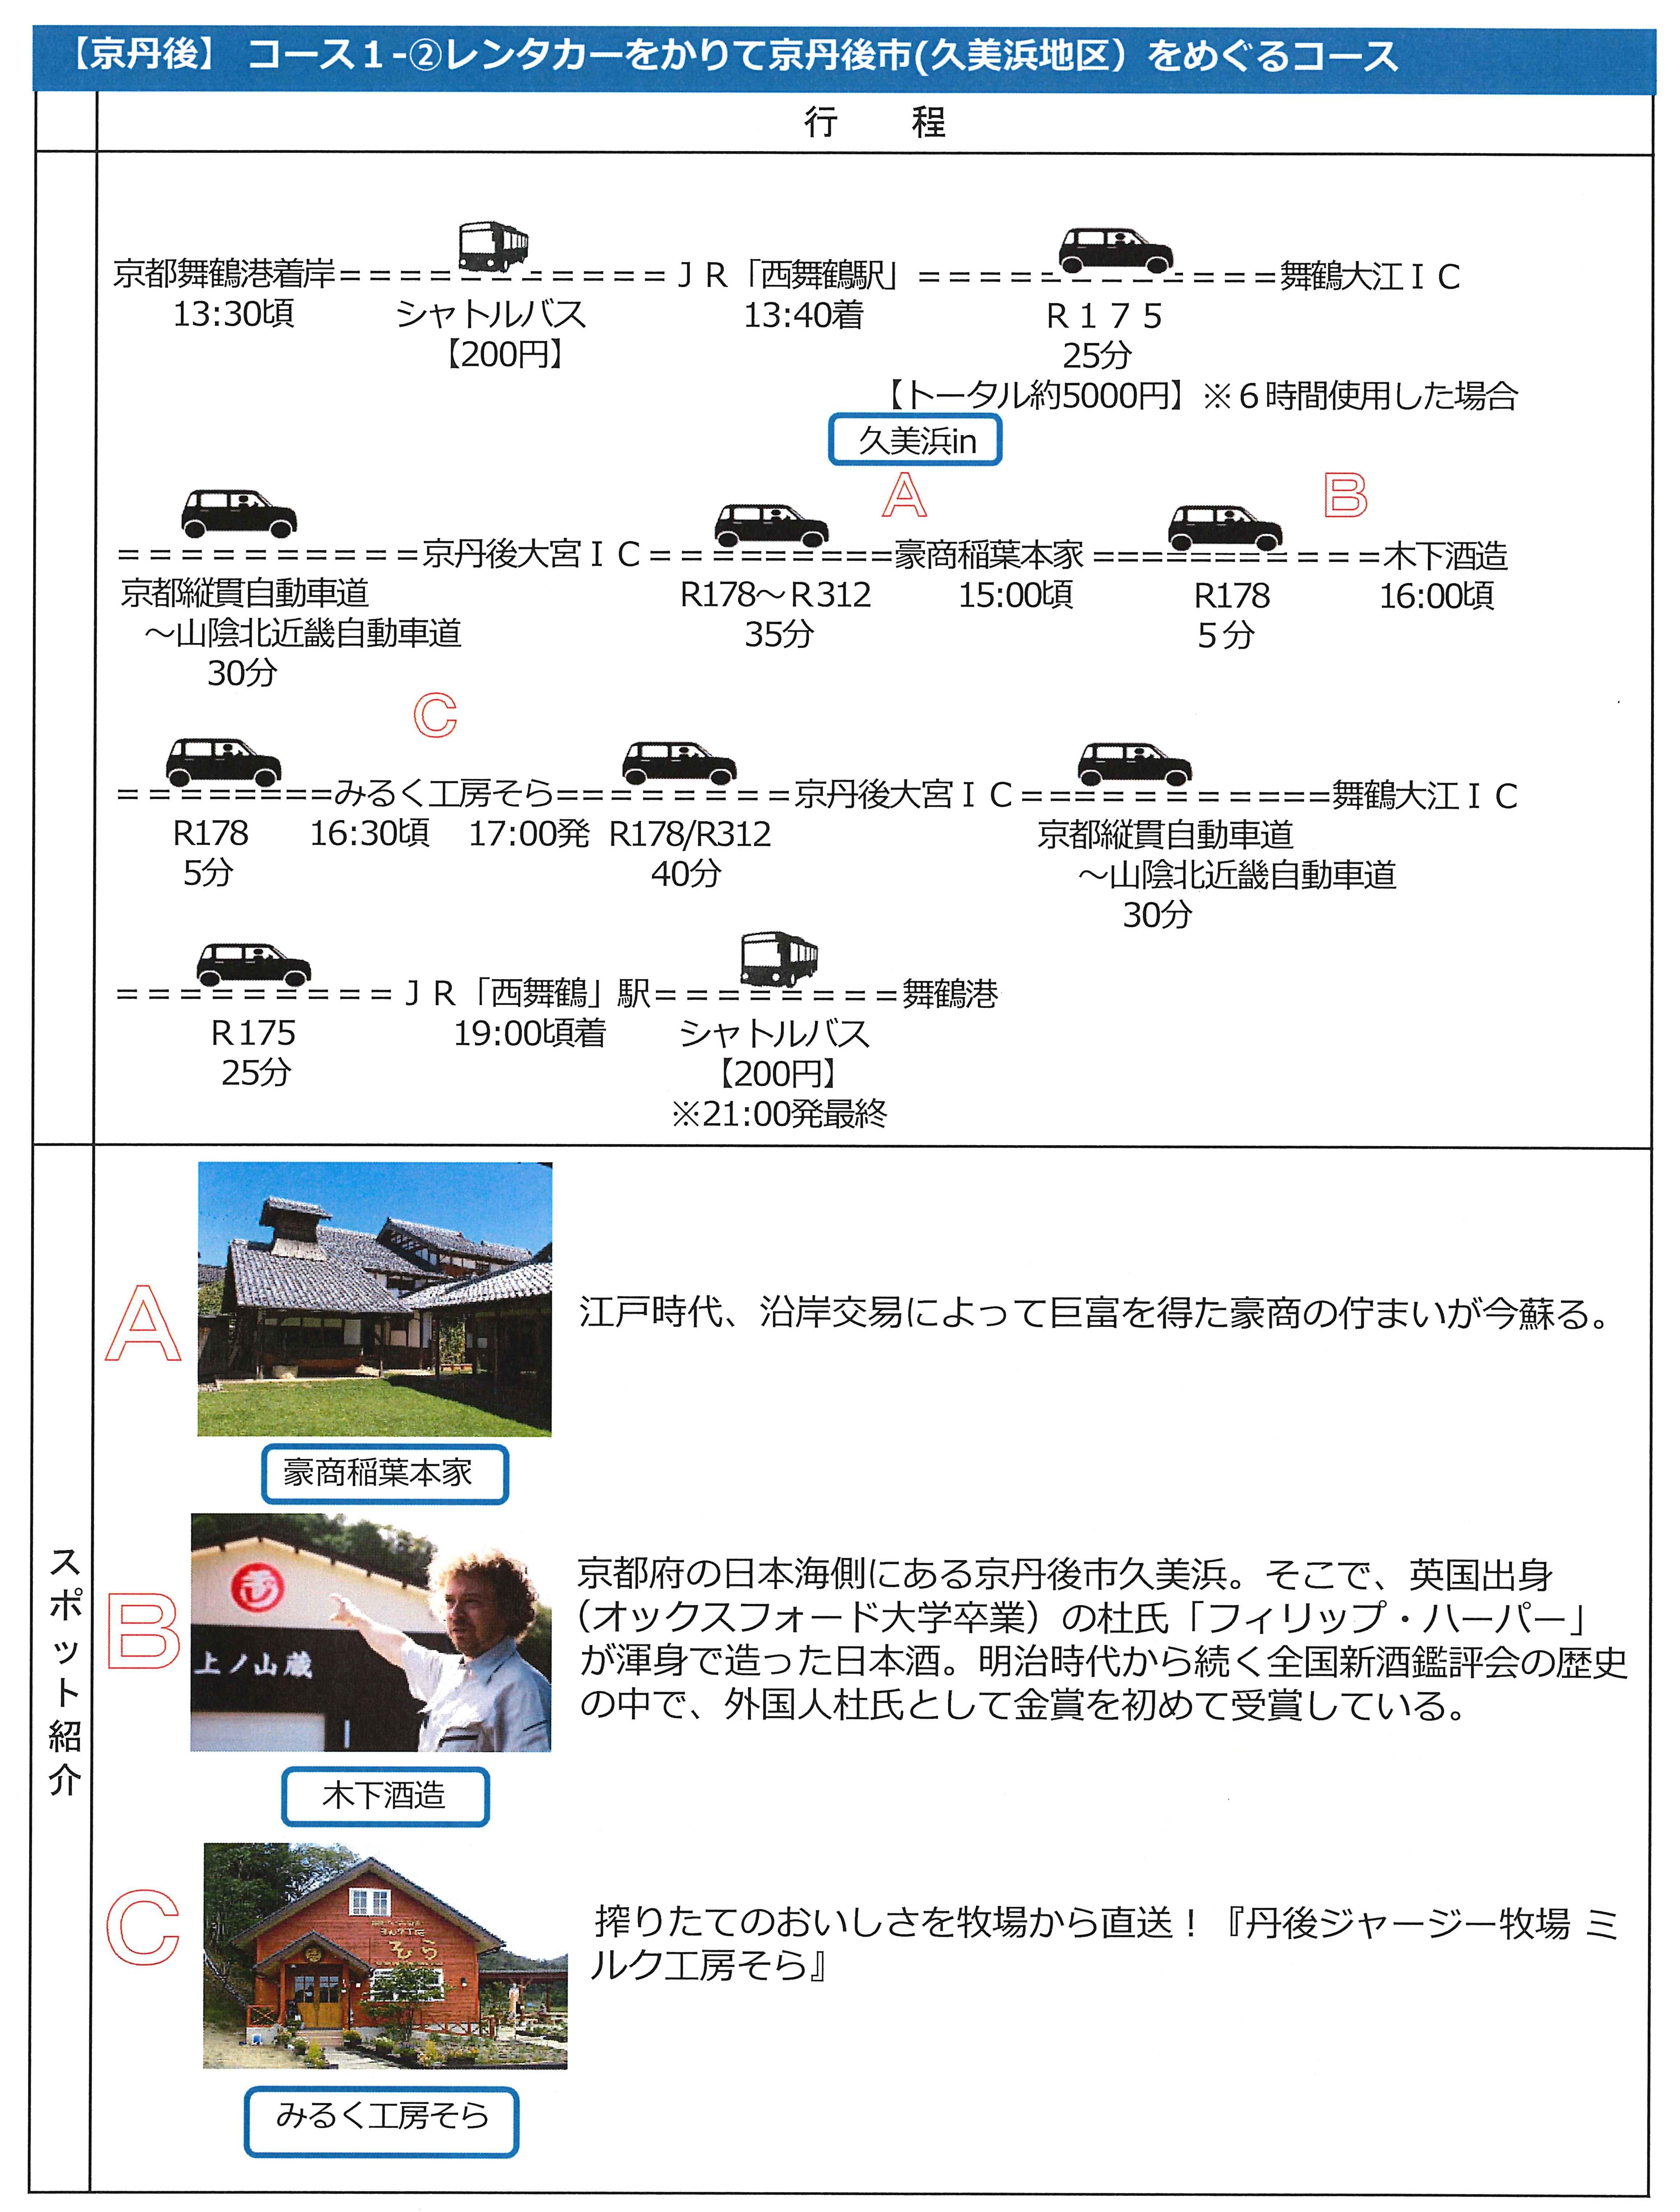 http://www.maizuru-kanko.net/event/img/%E4%BA%AC%E4%B8%B9%E5%BE%8C%20%282%29.jpg